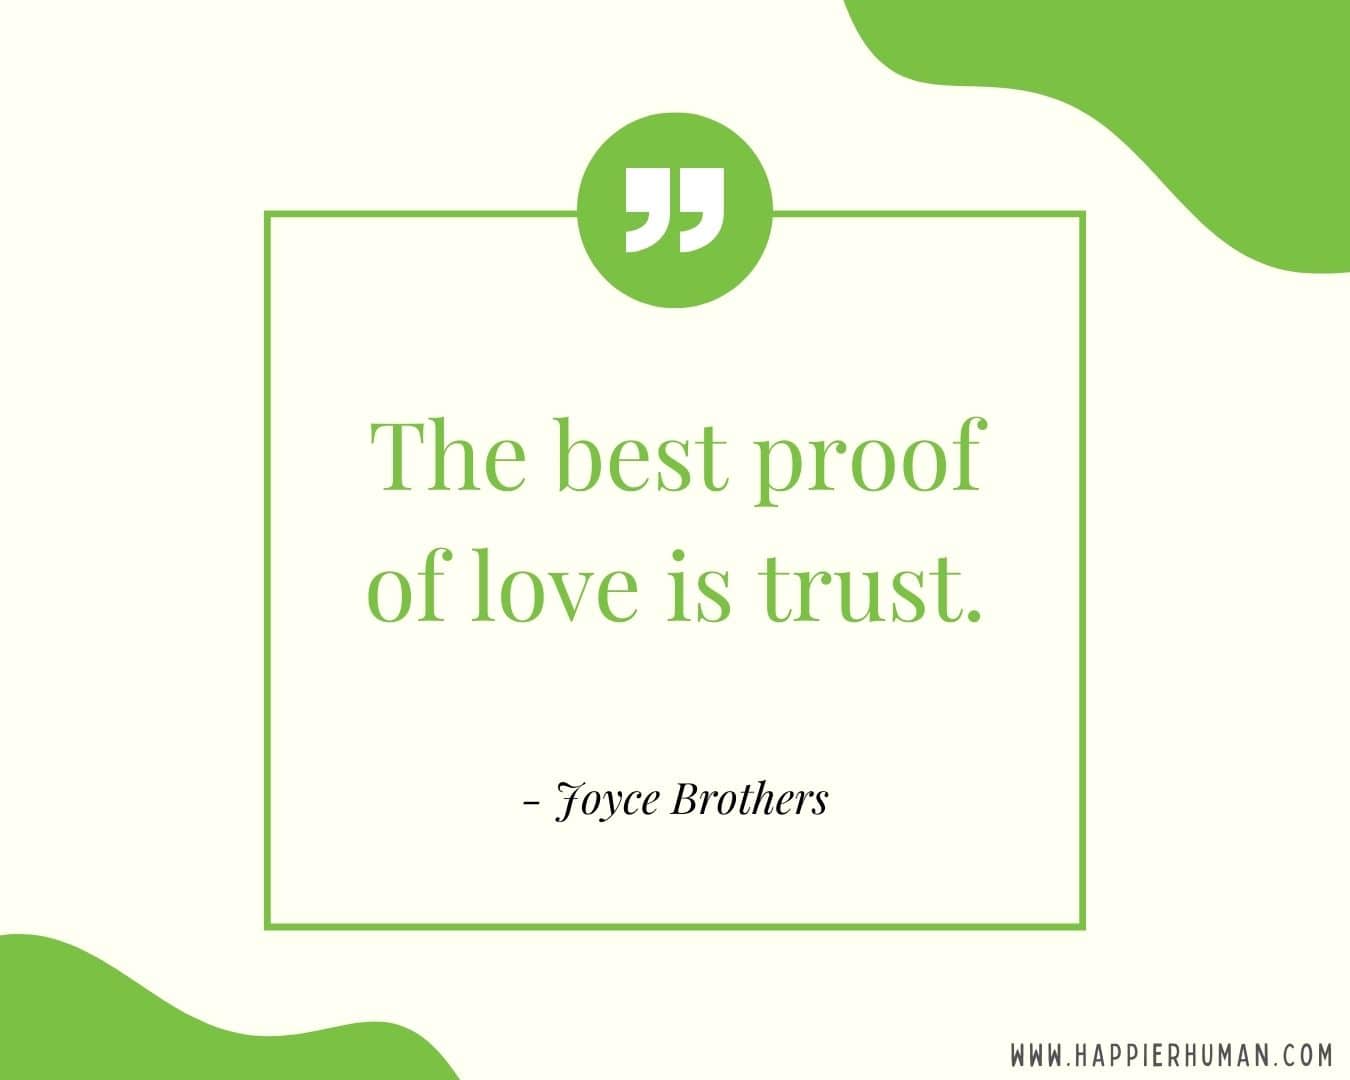 Broken Trust Quotes - “The best proof of love is trust.” - Joyce Brothers